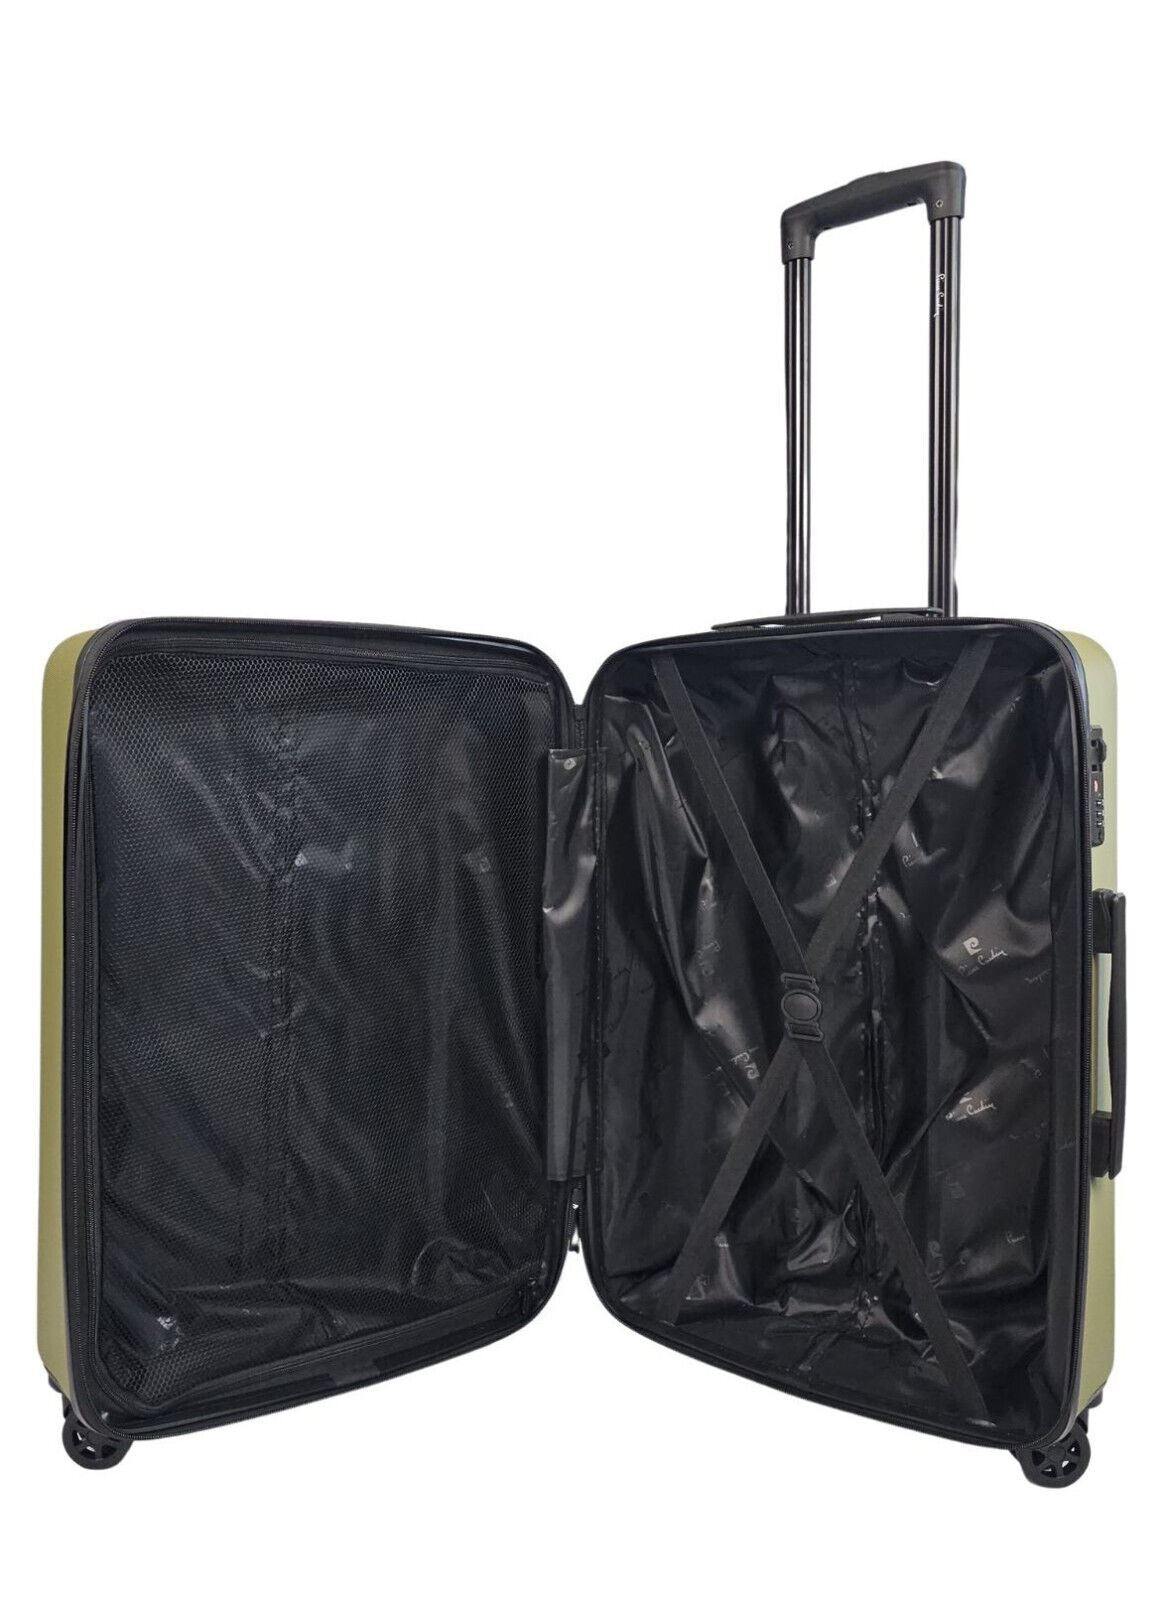 Cullman Medium Hard Shell Suitcase in Green